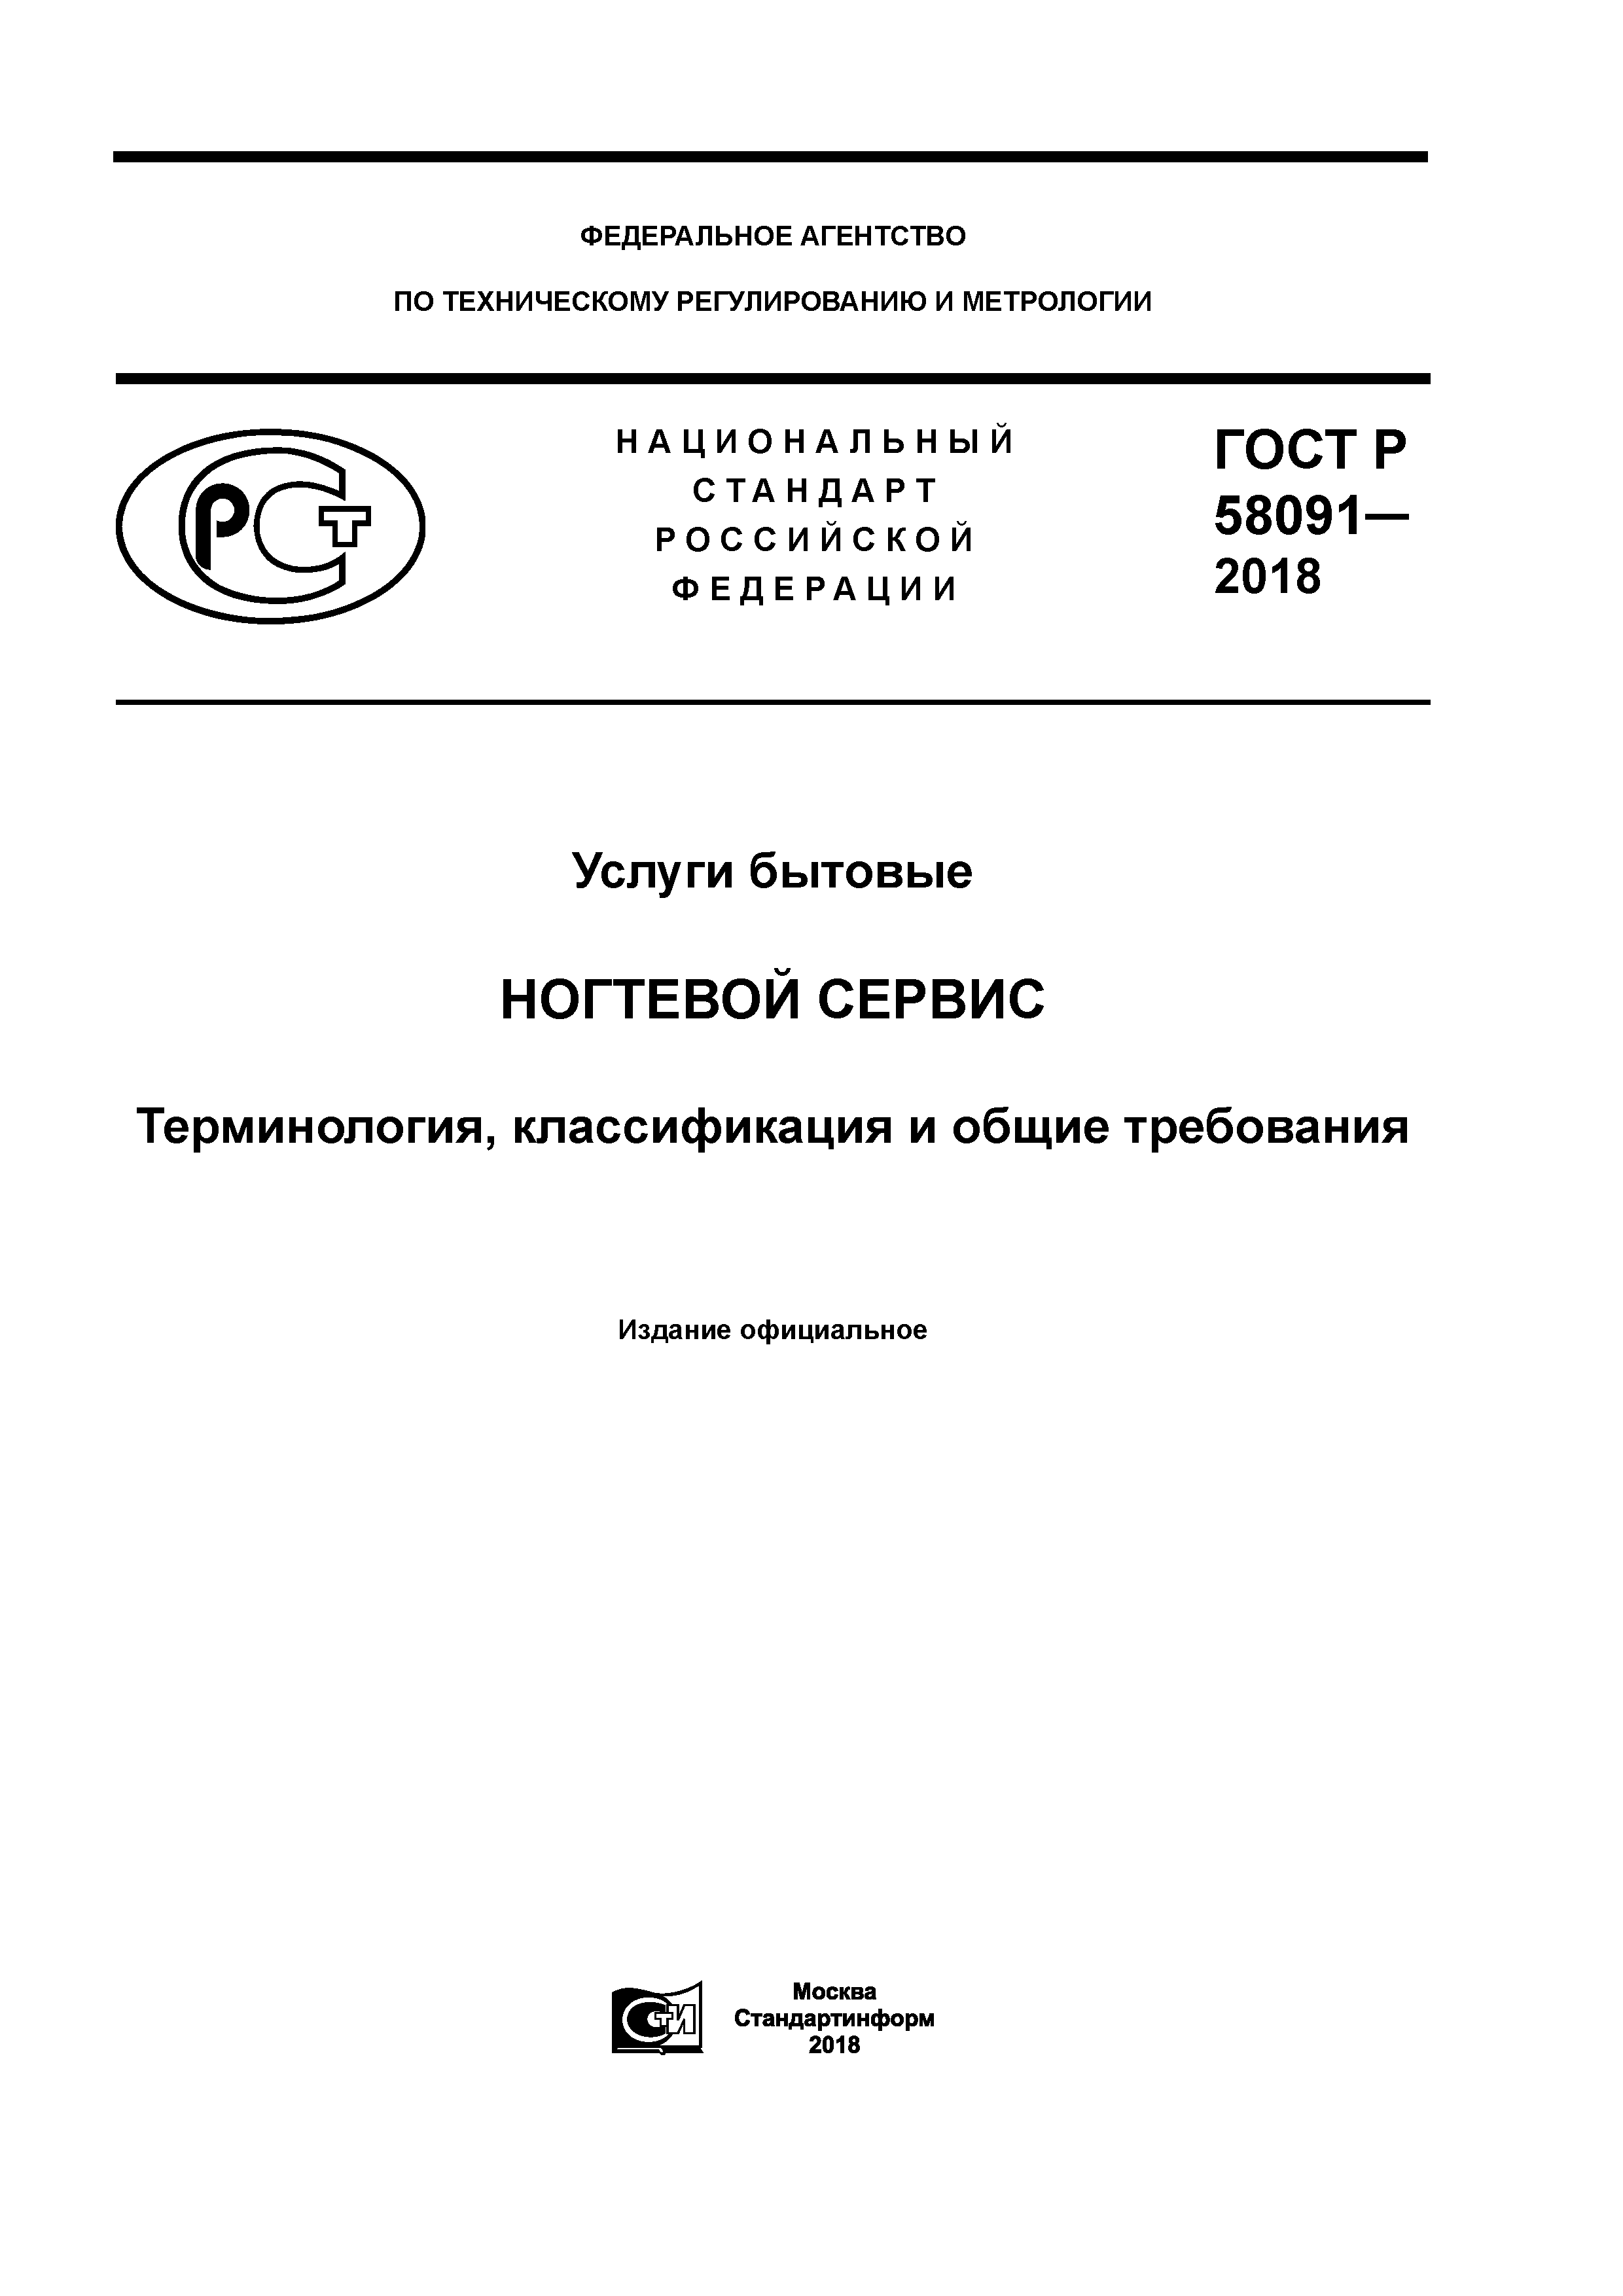 ГОСТ Р 58091-2018